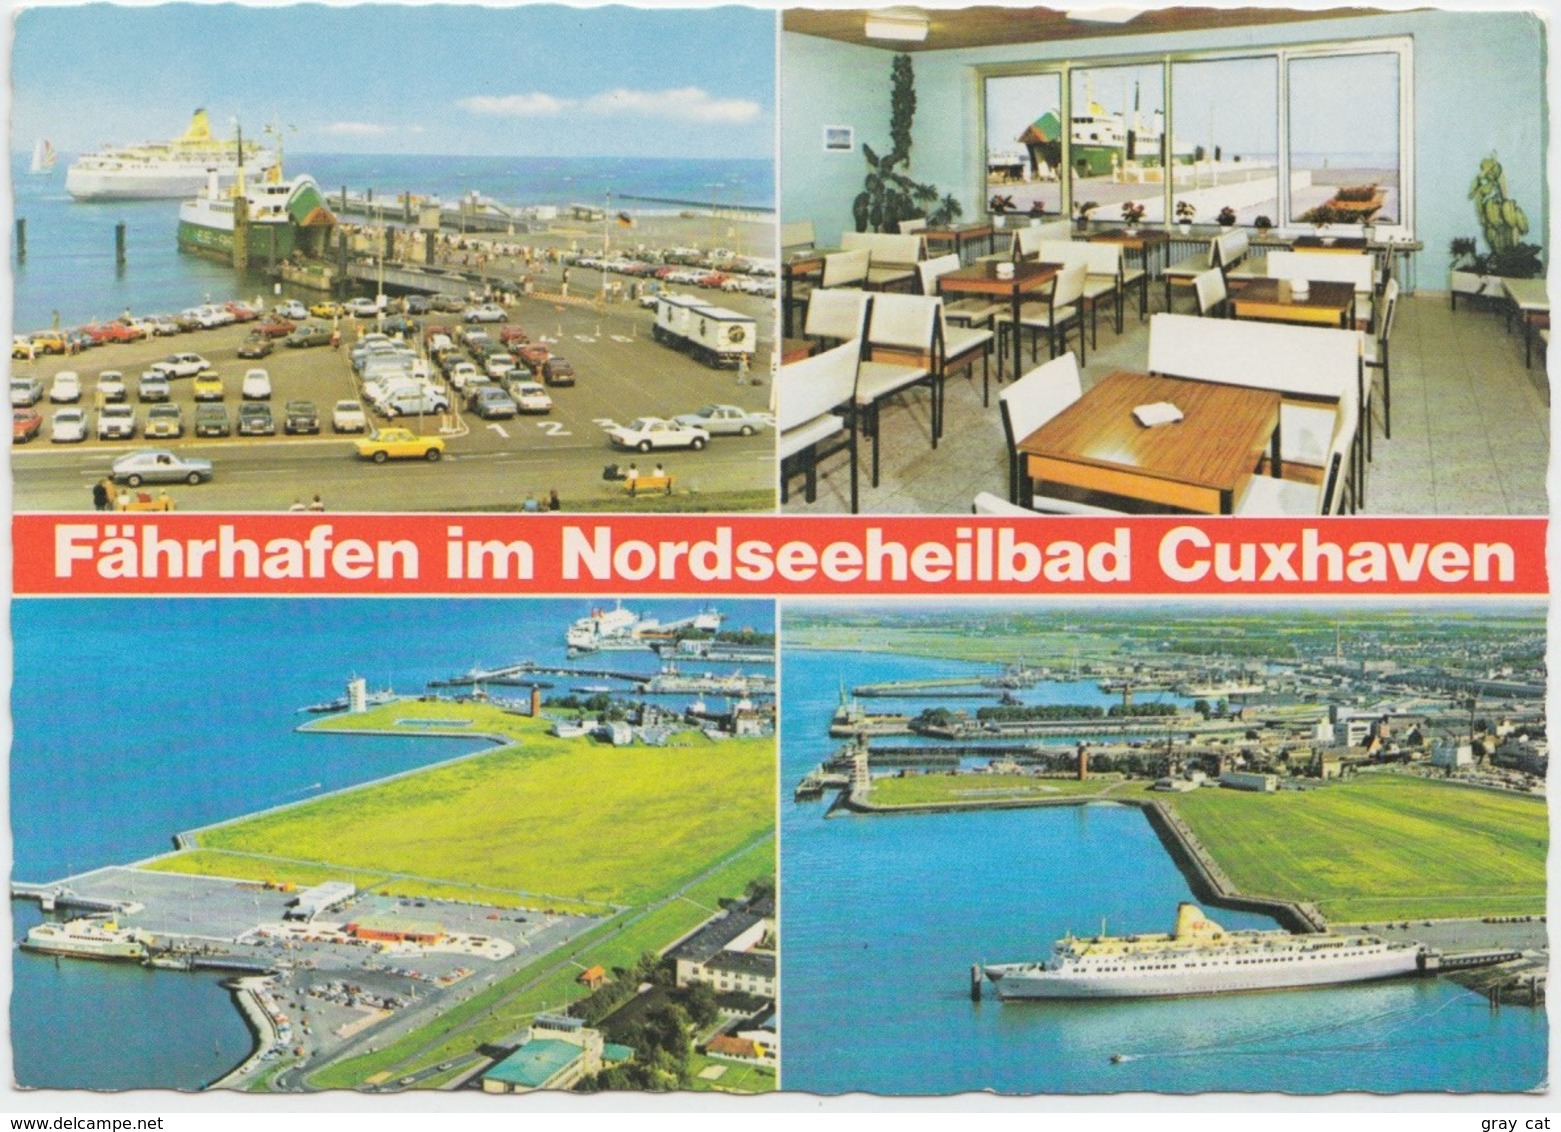 Fahrhafen Im Nordseeheilbad Cuxhaven, Germany, 1970s Unused Postcard [21392] - Cuxhaven